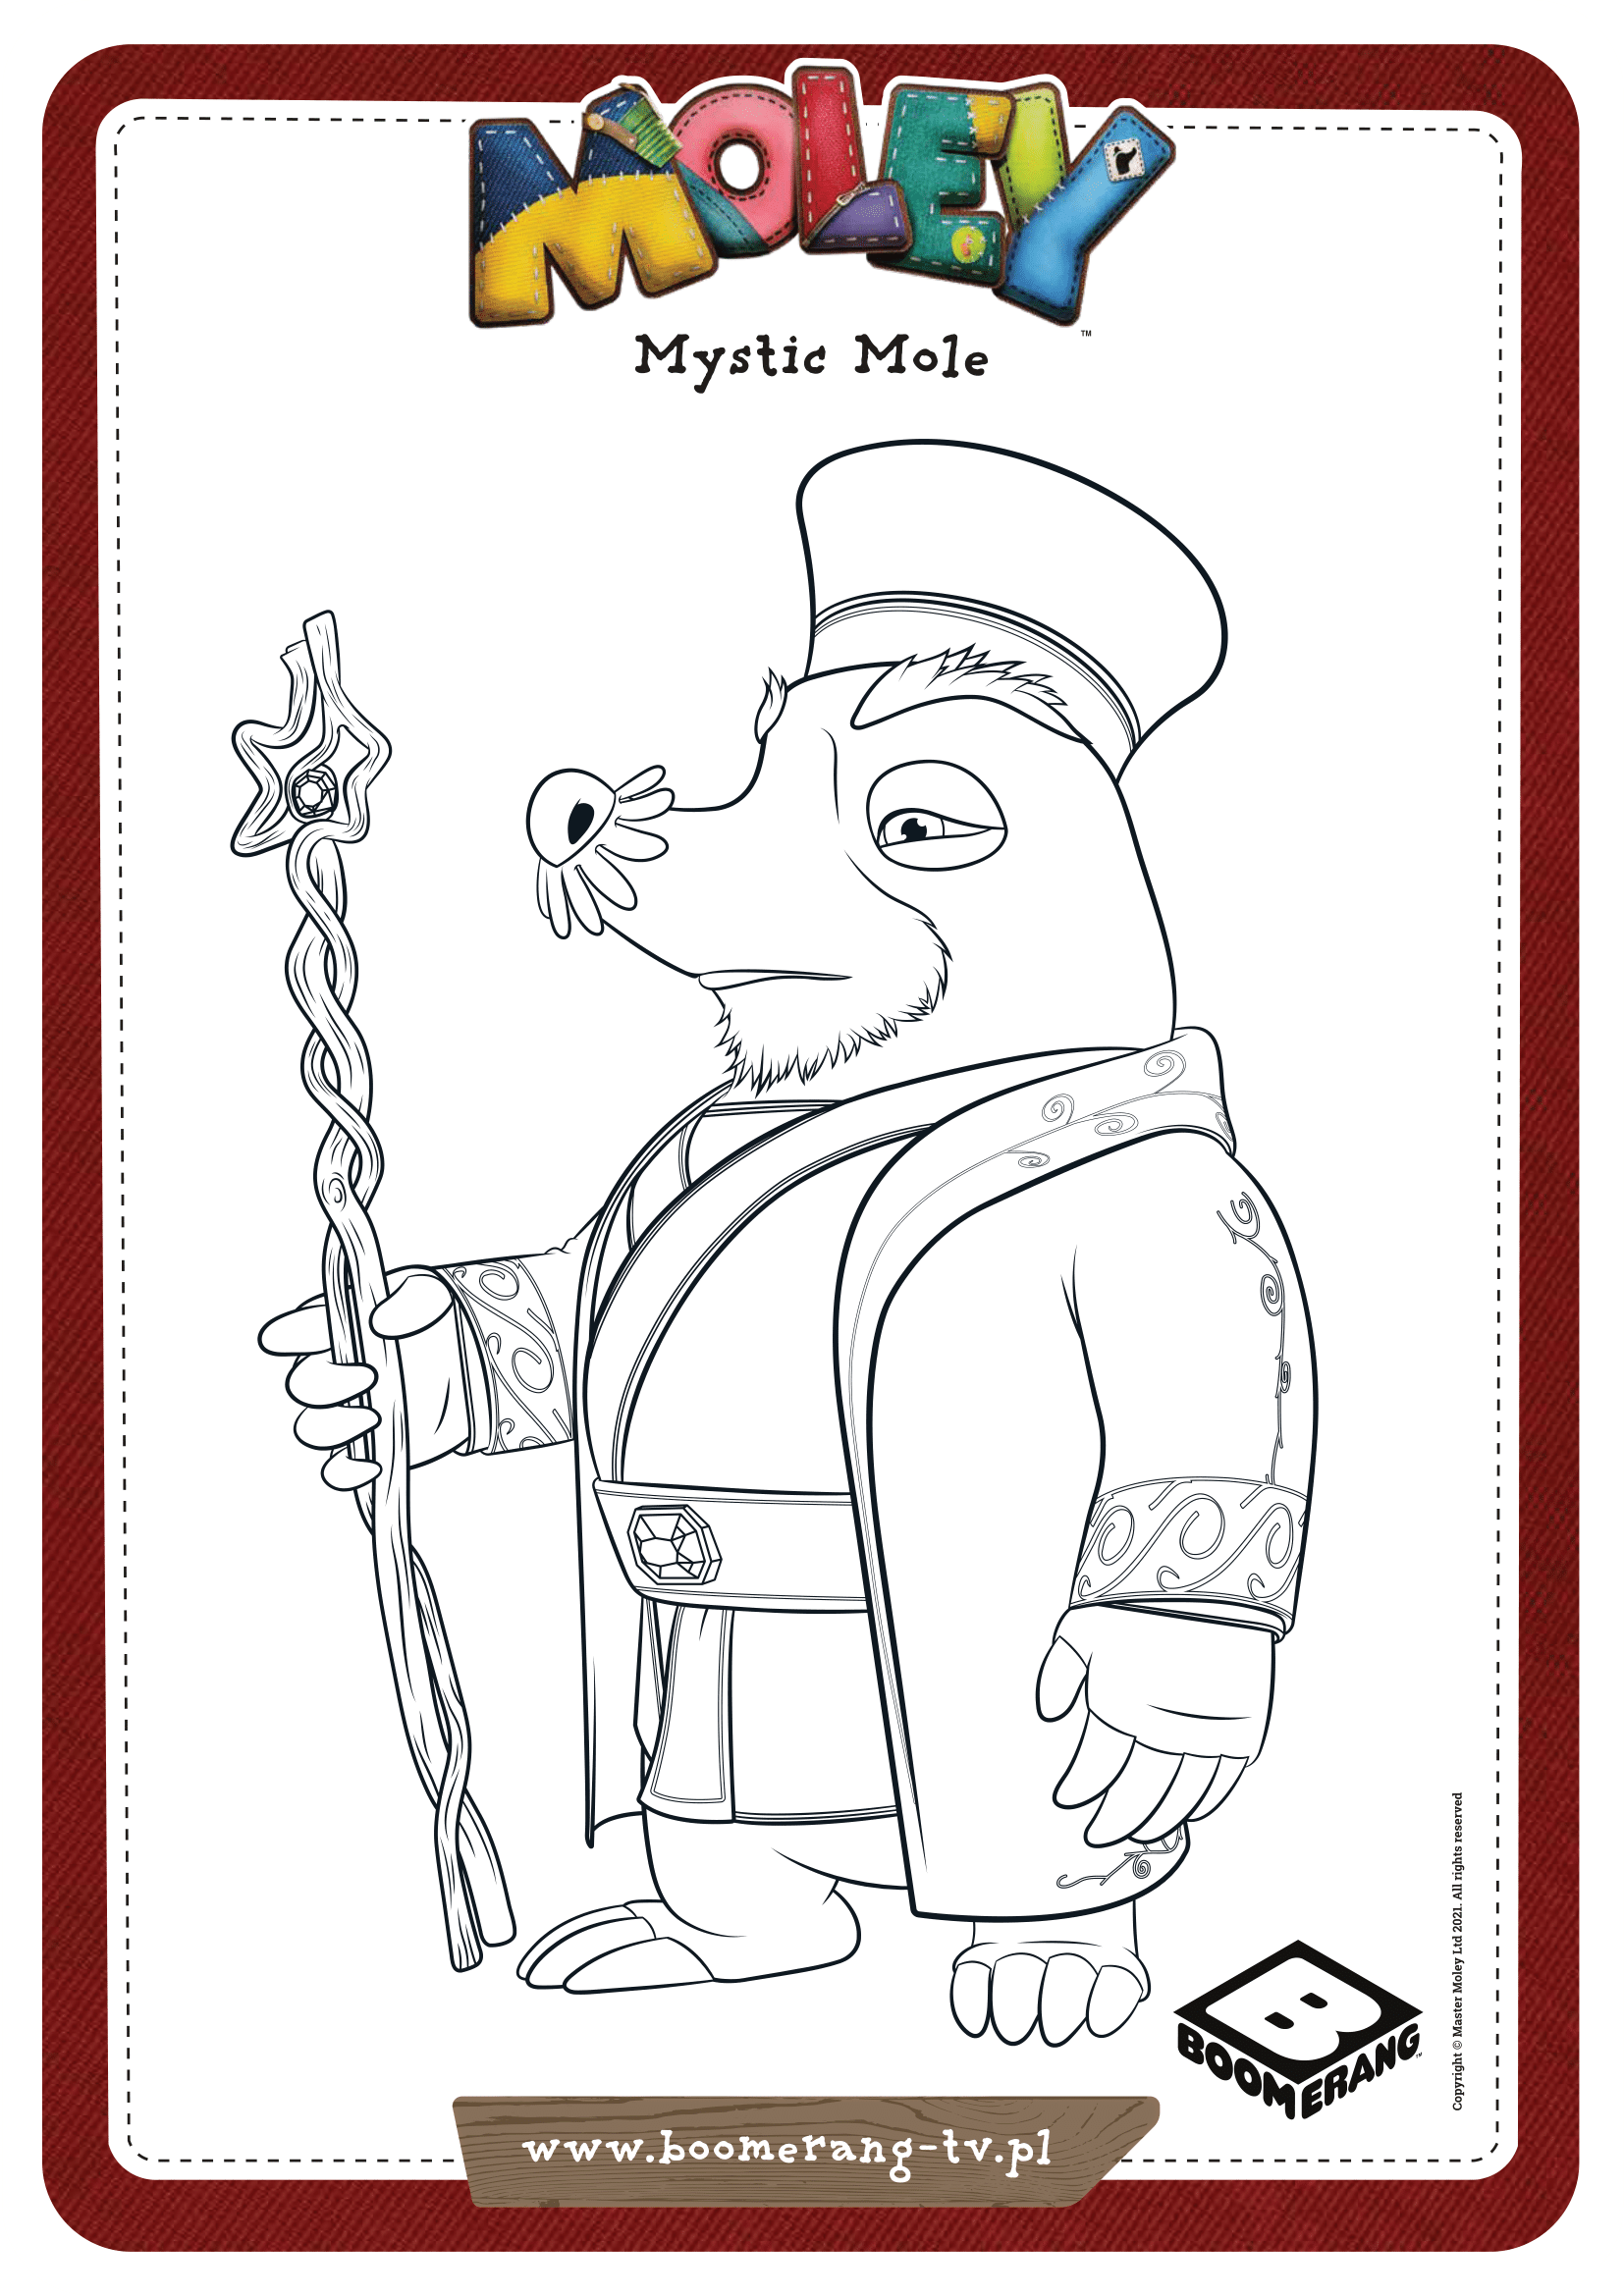 Mystic Mole